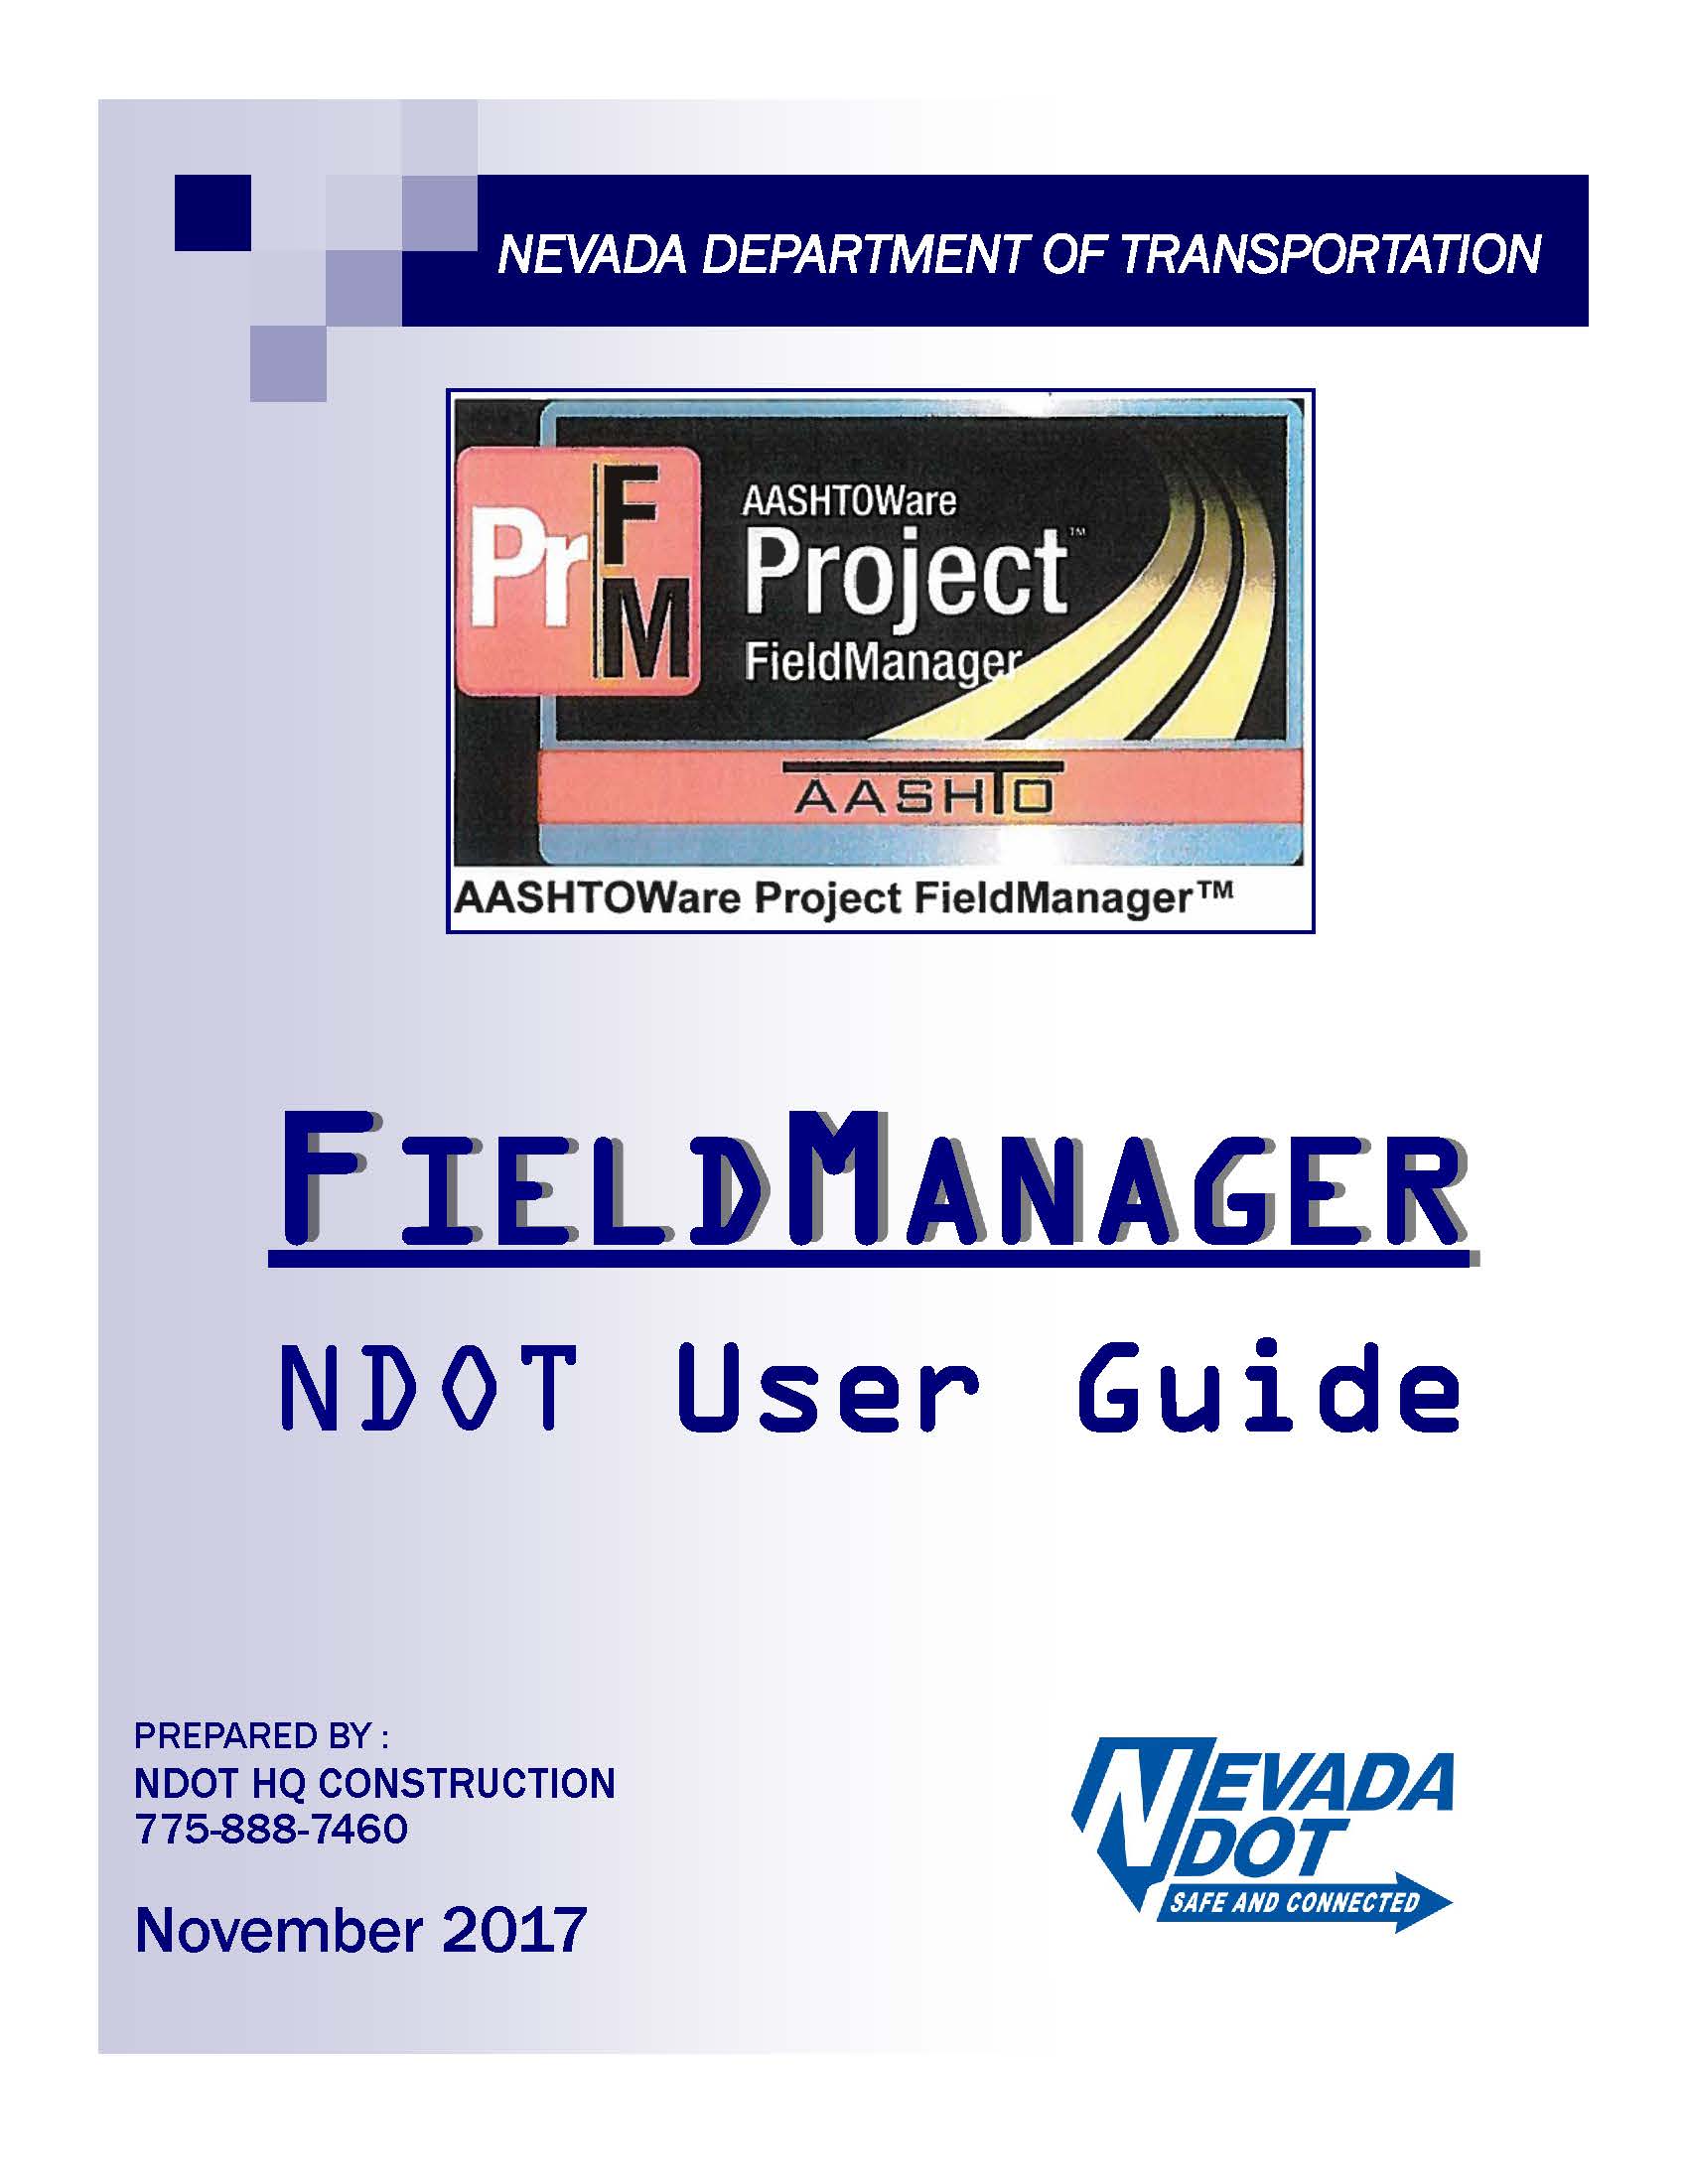 NDOT Logo - FieldManager User Guide. Nevada Department of Transportation